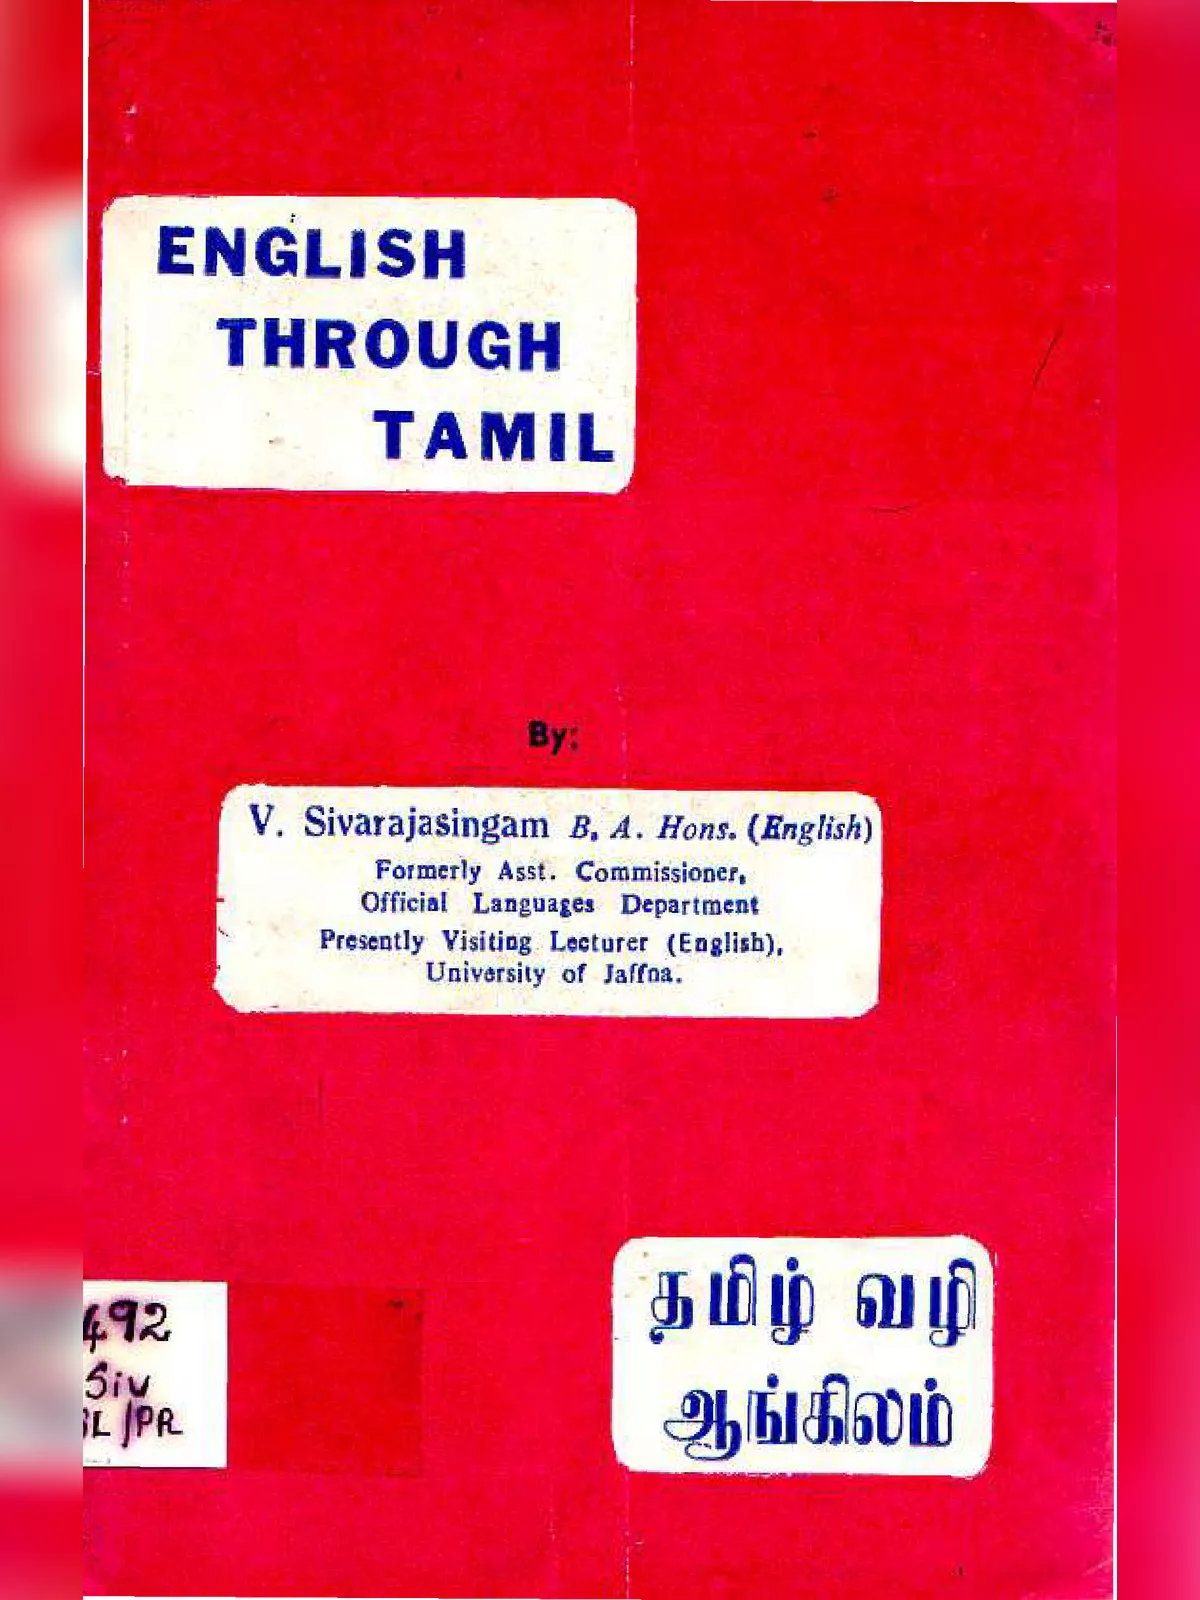 Spoken English in Tamil